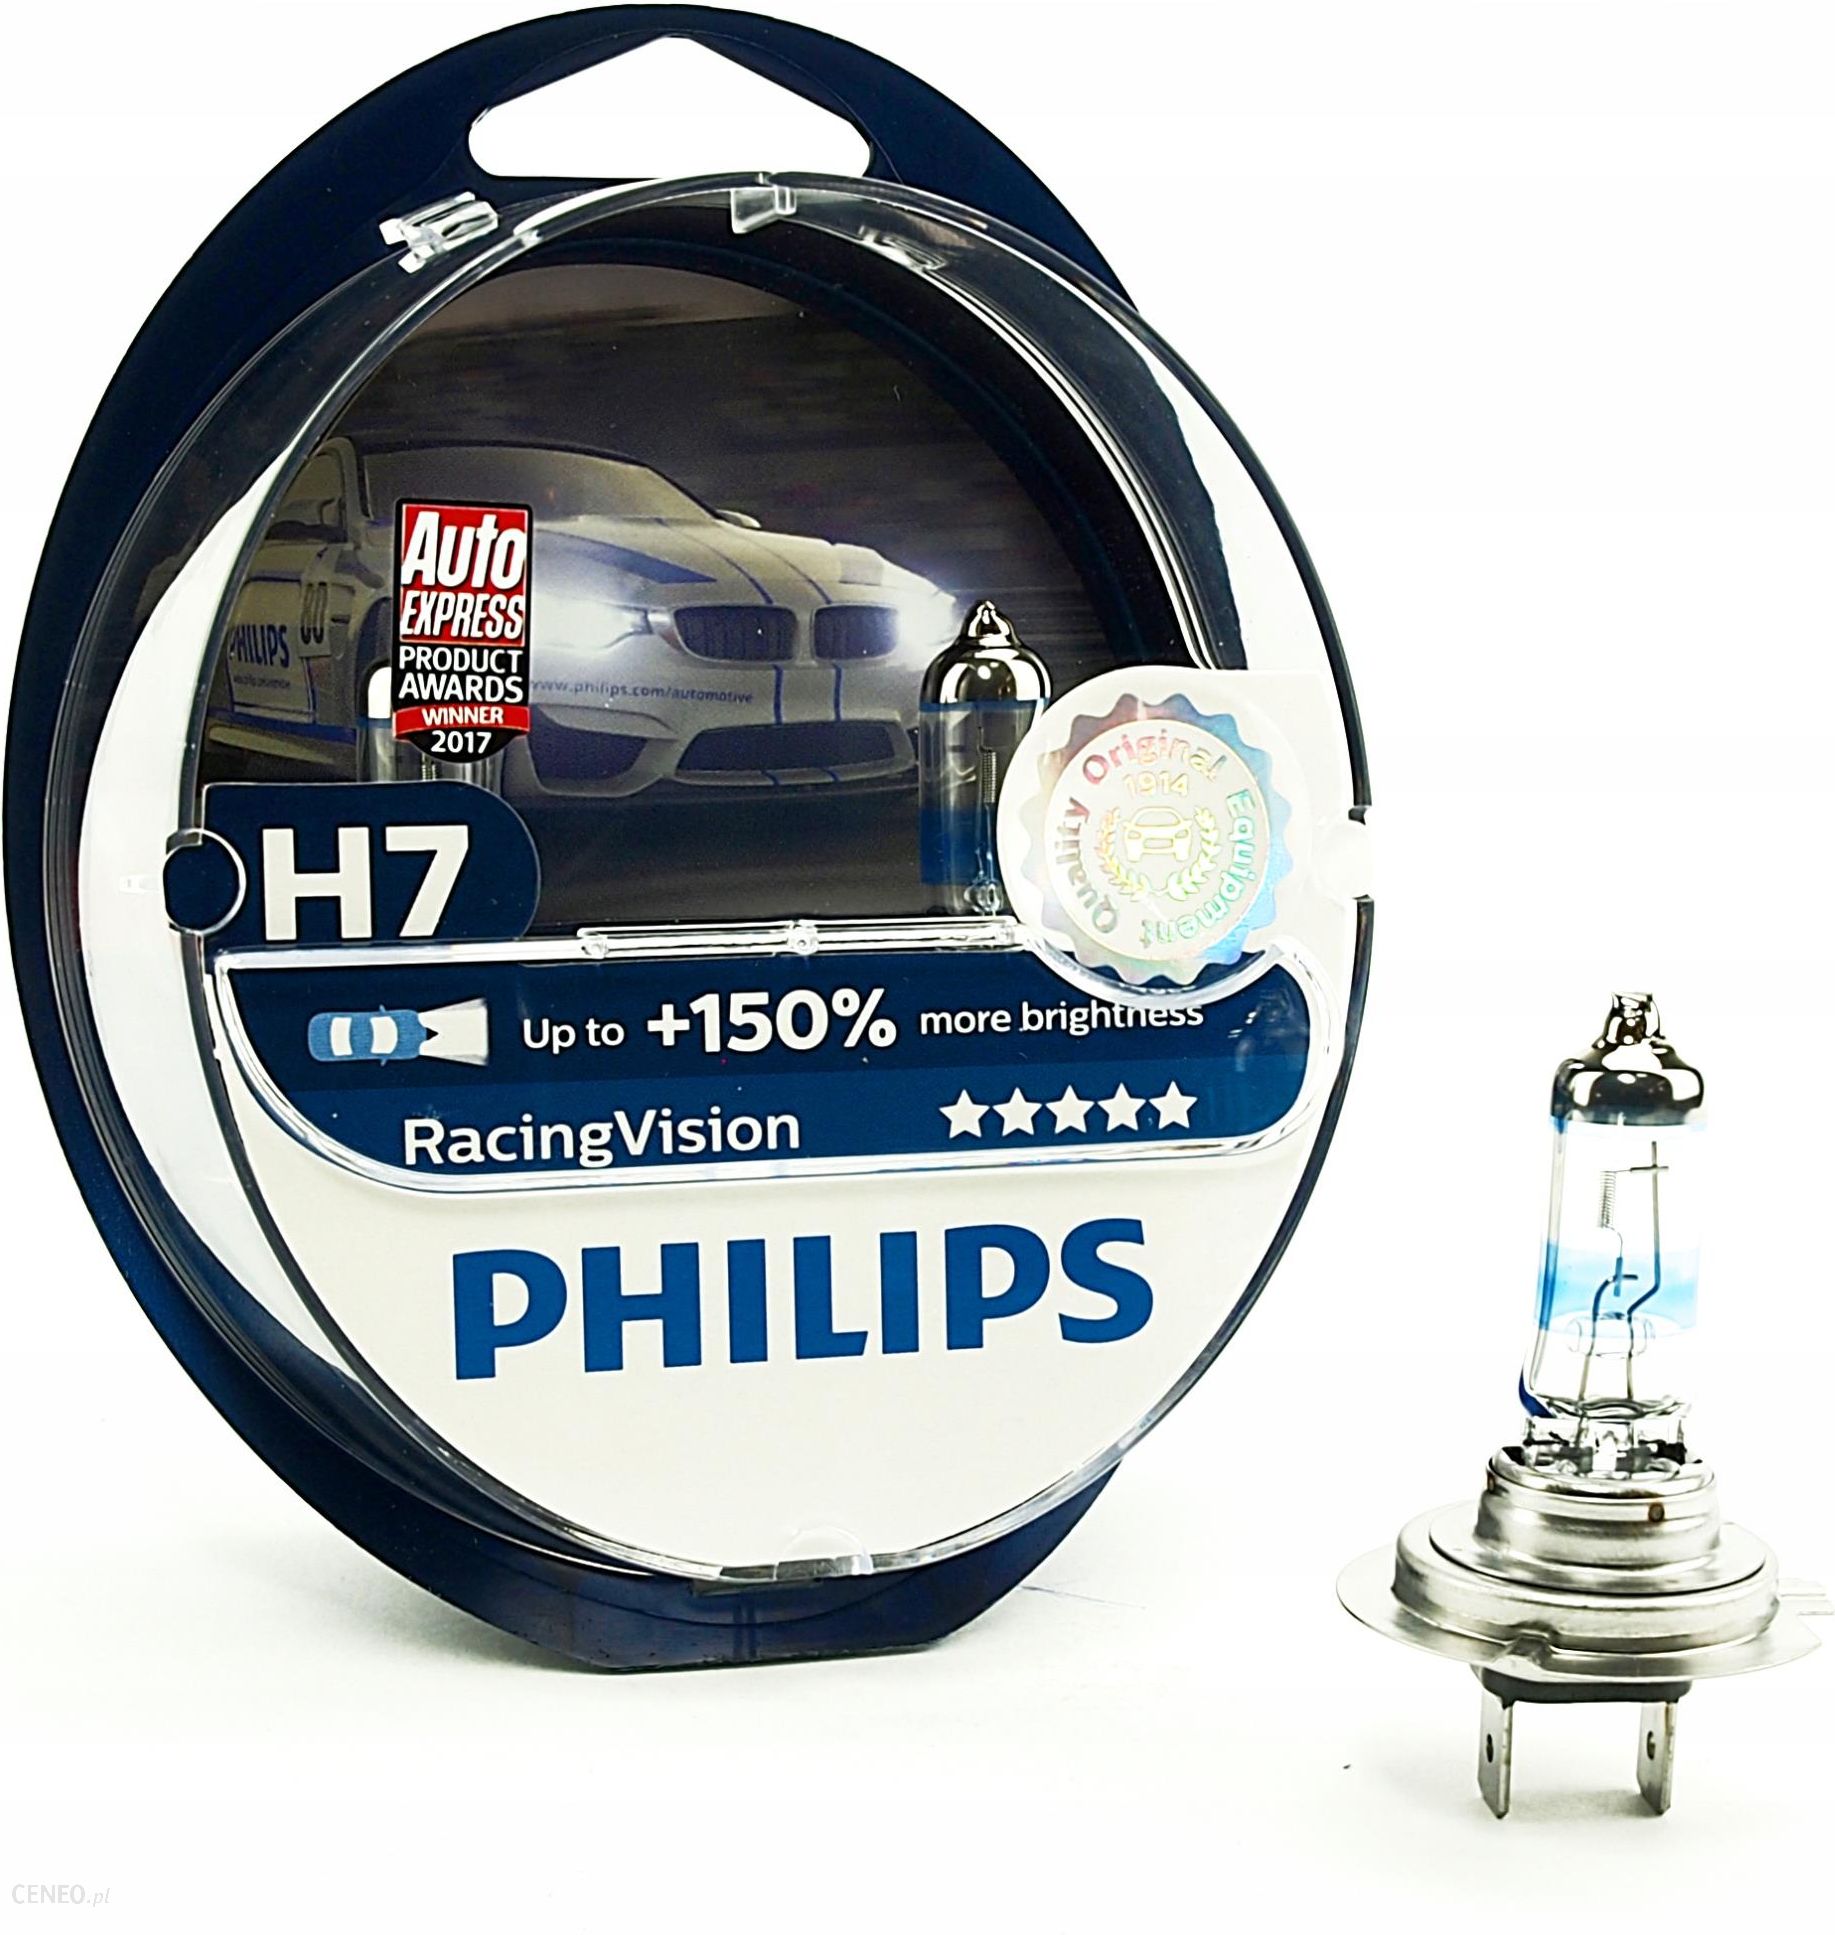 Philips h7 купить. H7 Philips RACINGVISION +150. Лампы Филипс h7 рейсинг Вижн 150. Philips лампы h7 +150. Лампа Philips Racing Vision h7.